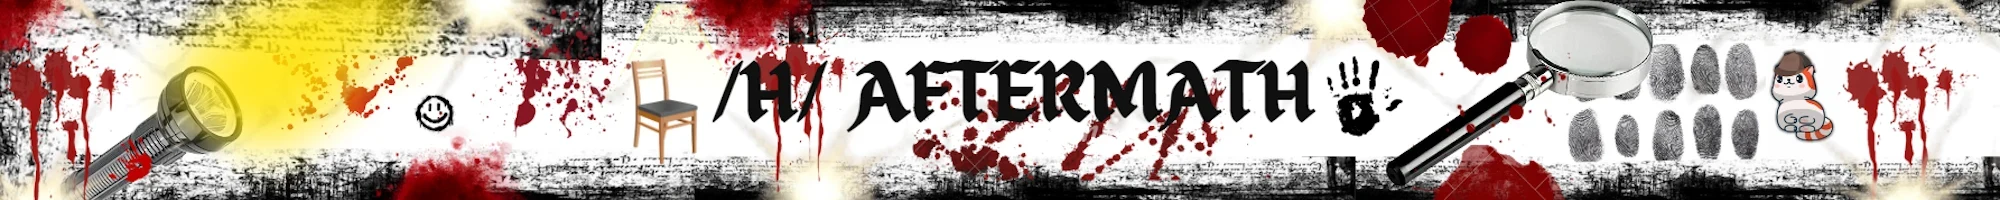 /h/aftermath banner